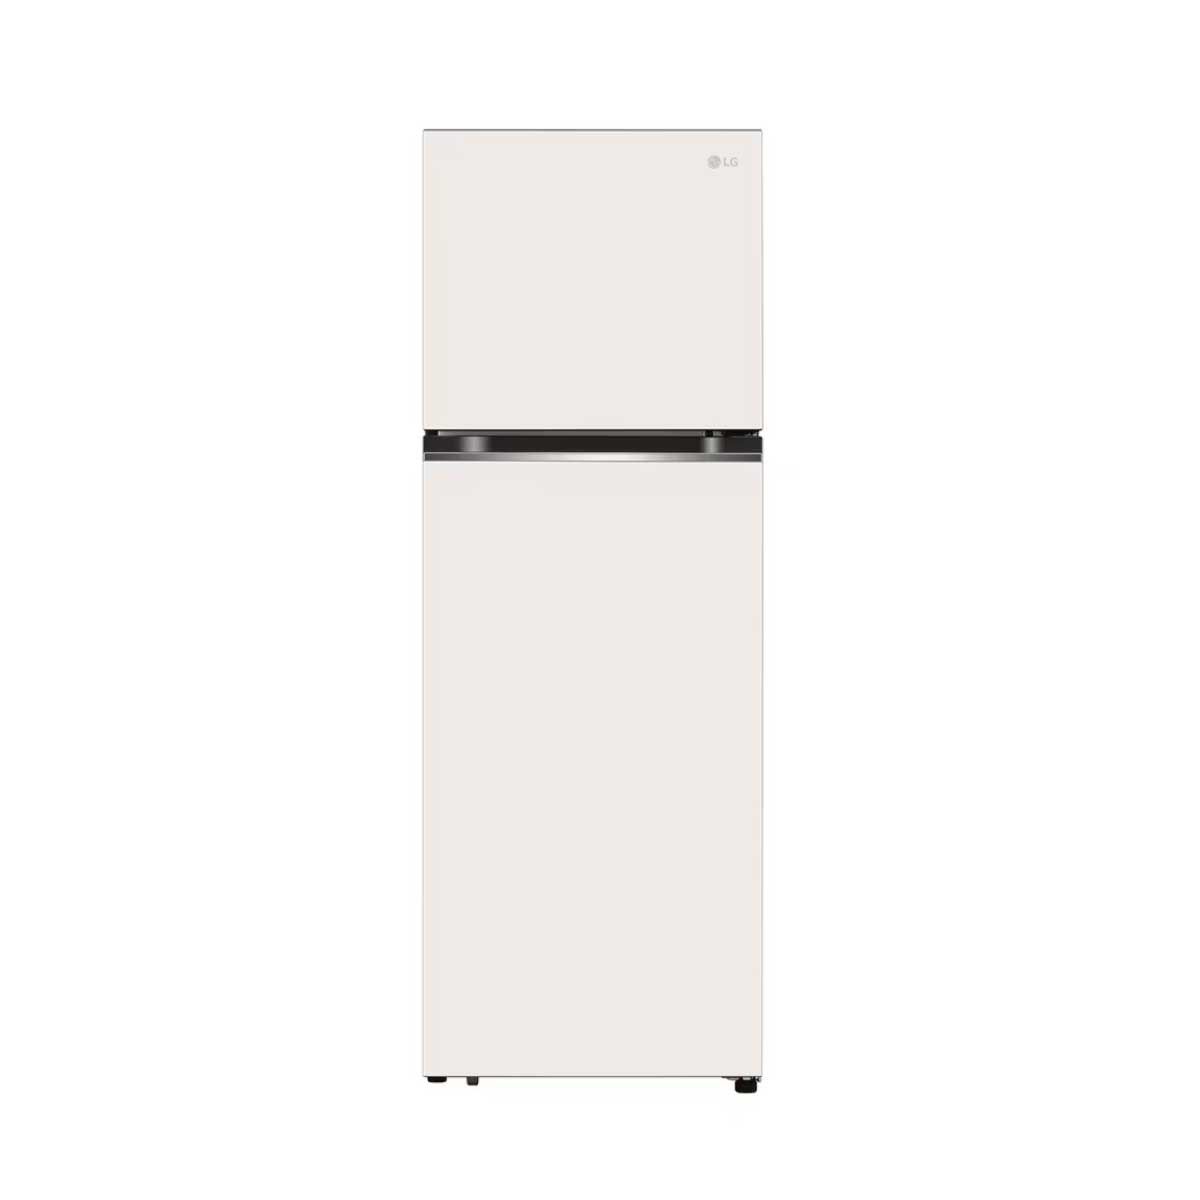 LG ตู้เย็น 2 ประตู Macaroon 11.8 Q ระบบ Smart Inverter สีเบจ รุ่น GN-D322PBMB